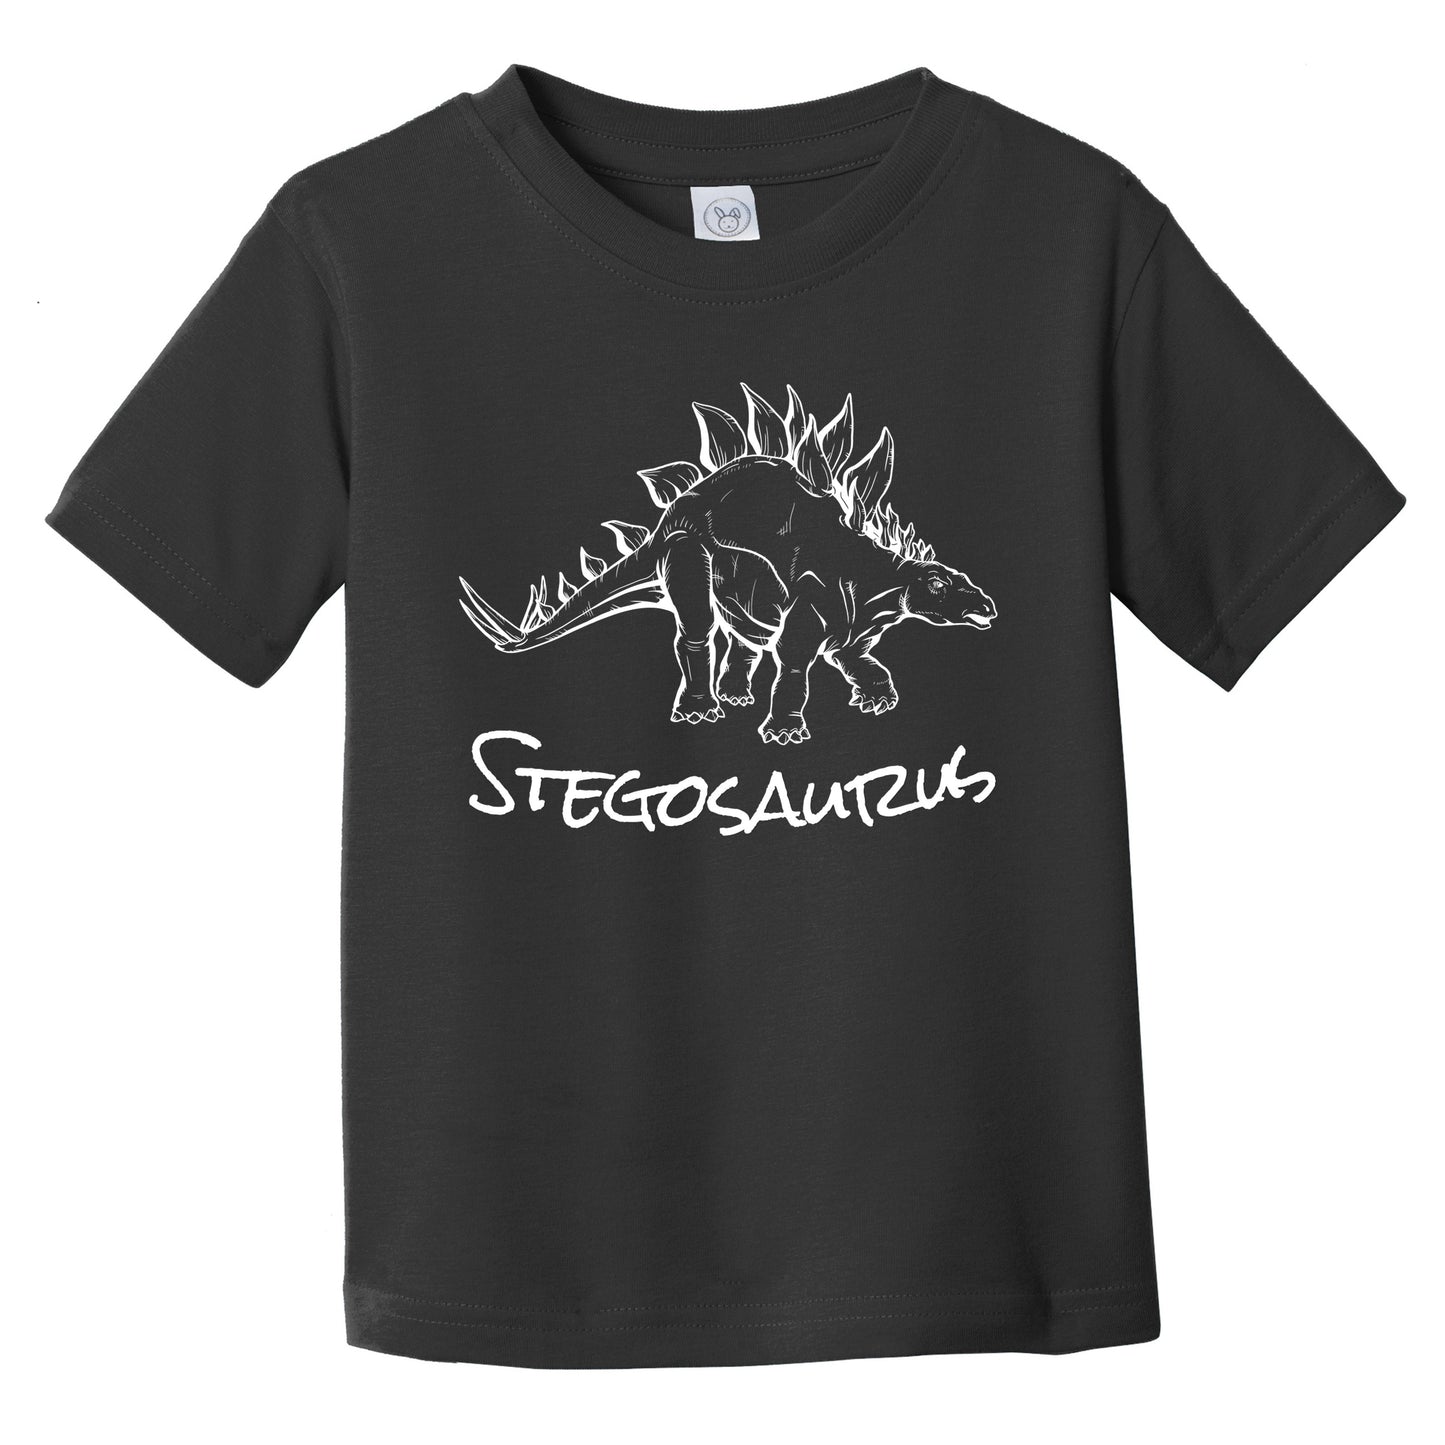 Stegosaurus Sketch Cool Prehistoric Animal Dinosaur Infant Toddler T-Shirt